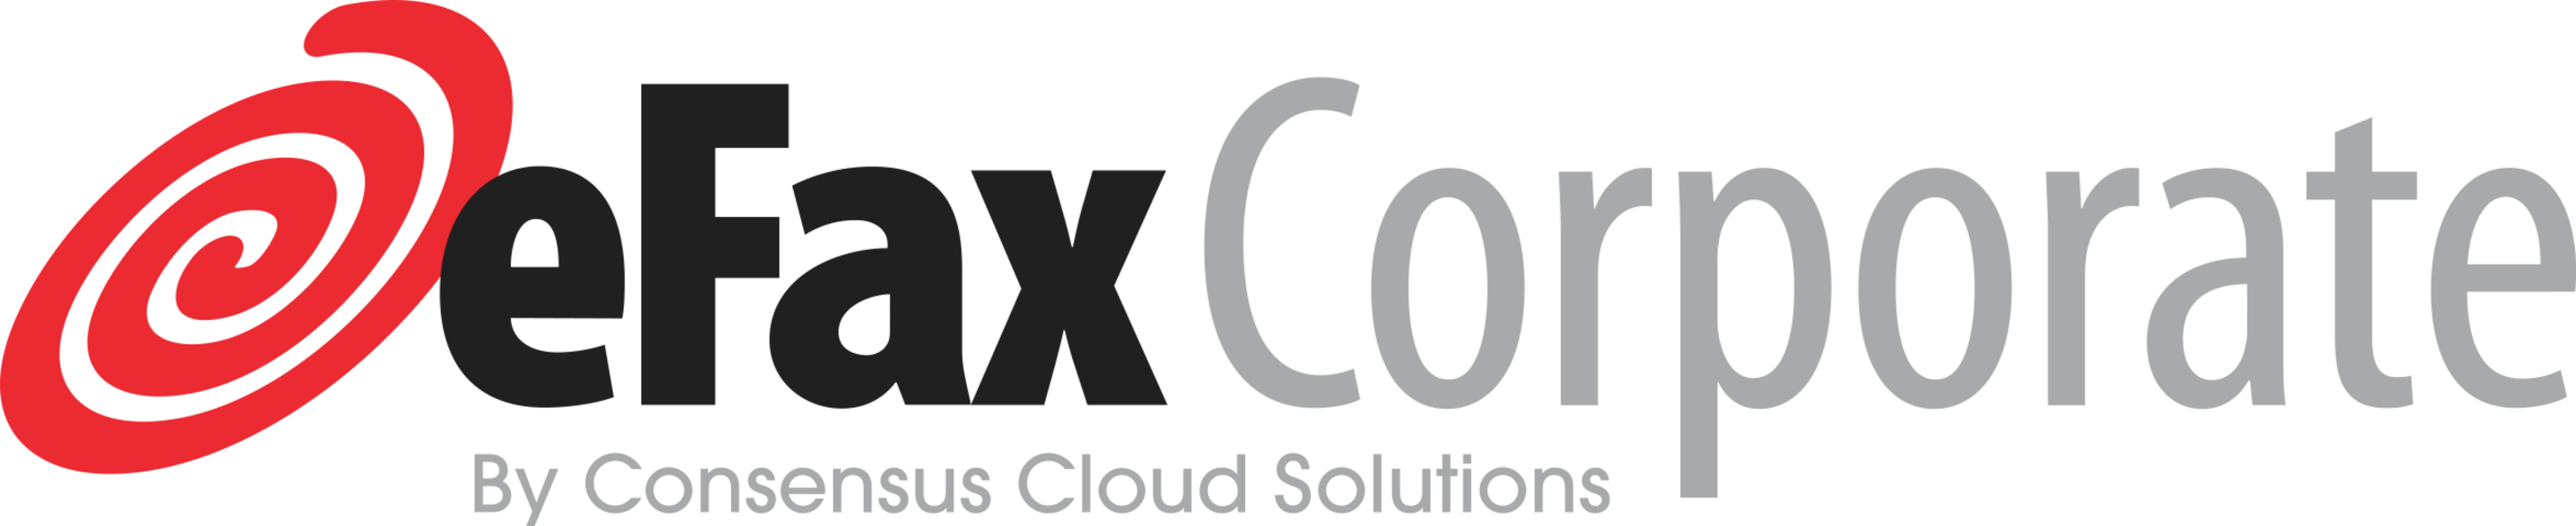 Consensus Cloud Solutions